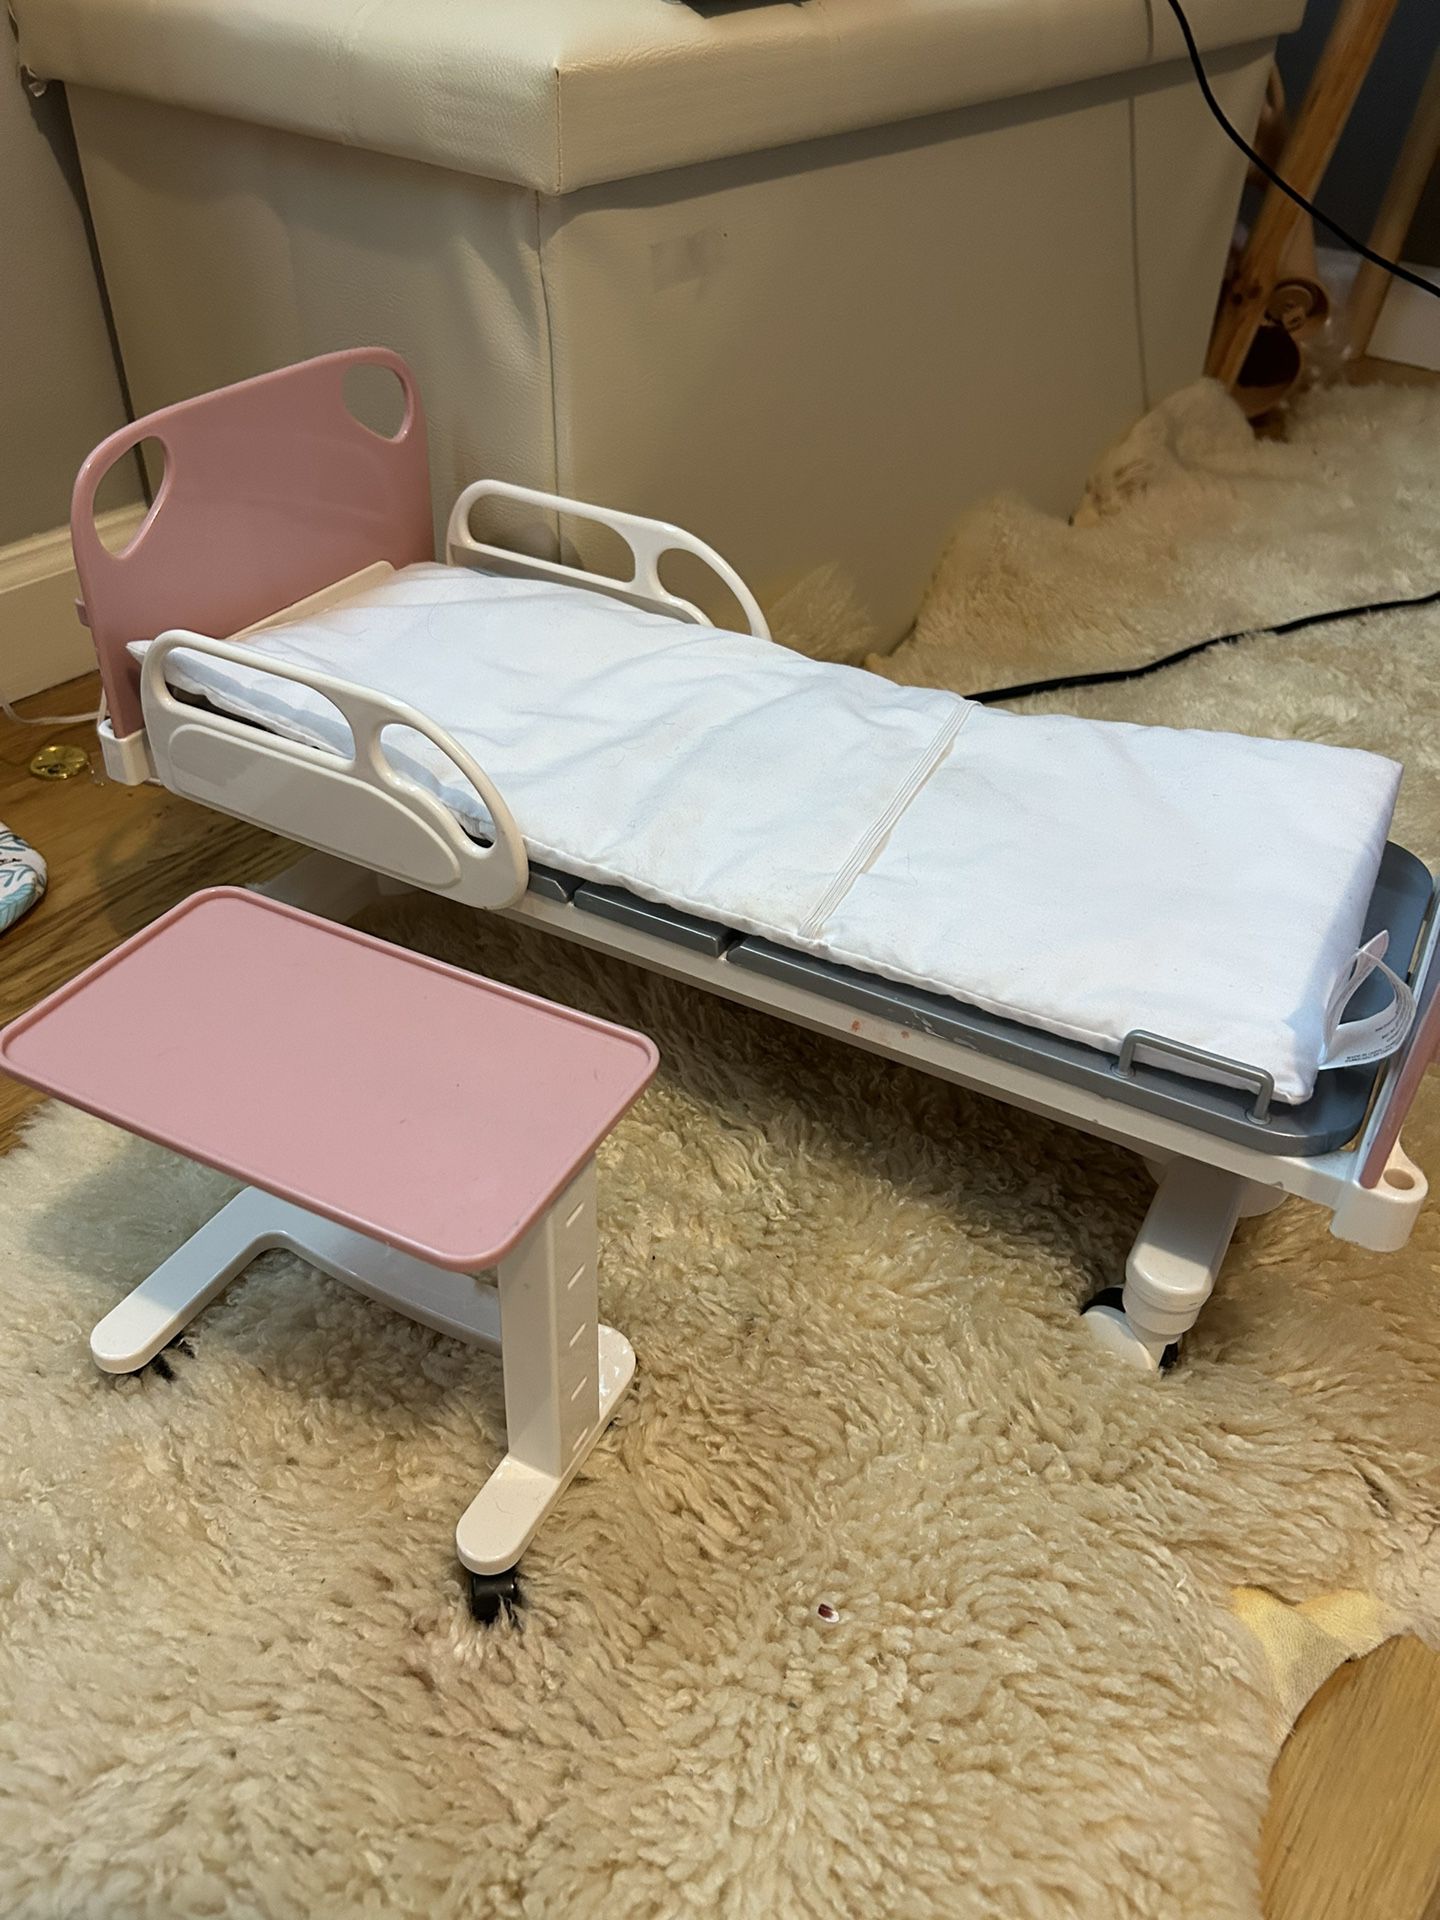 My Generation Doll Hospital Bed